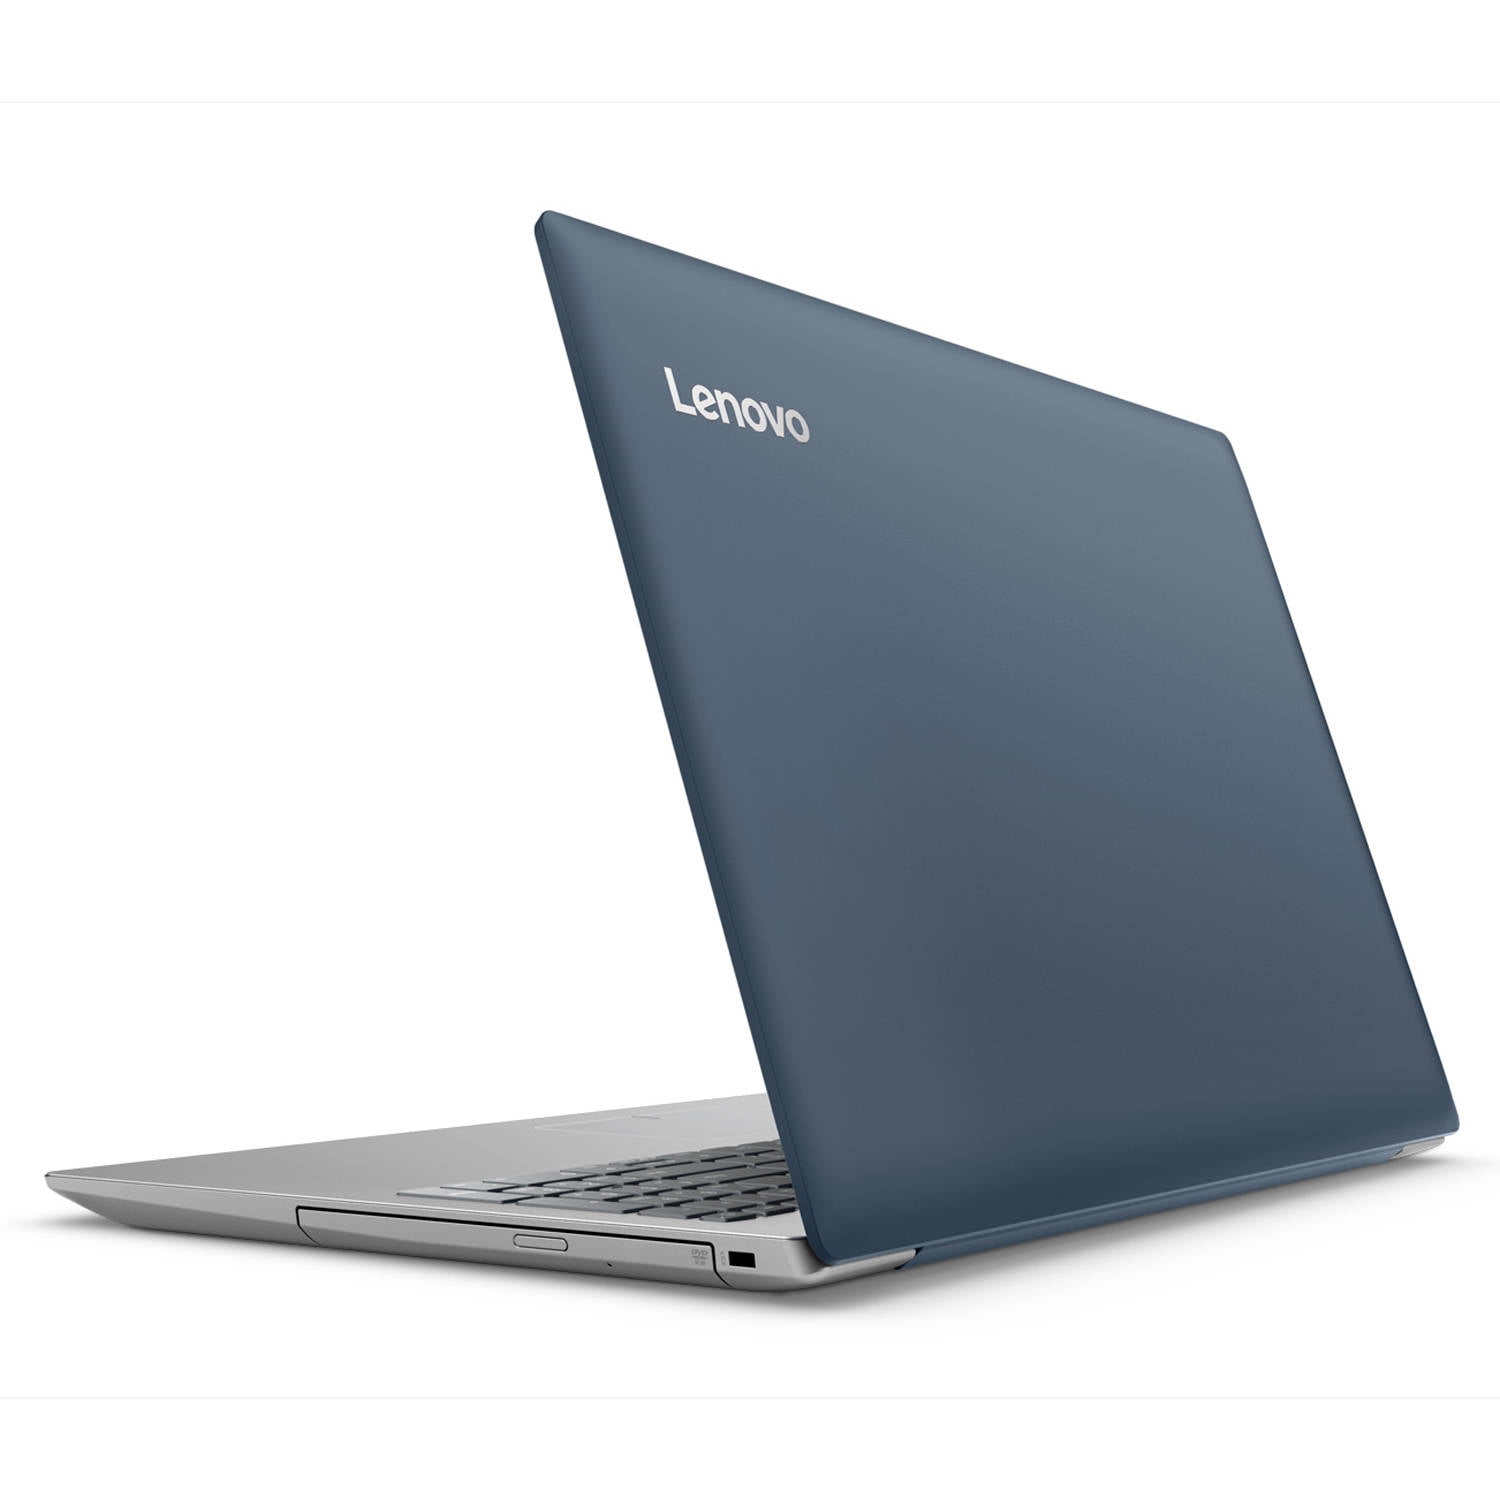 Lenovo ideapad 320 15.6" Windows 10, Intel Celeron N3350 Dual-Core 4GB RAM, 1TB Hard Drive - Walmart.com